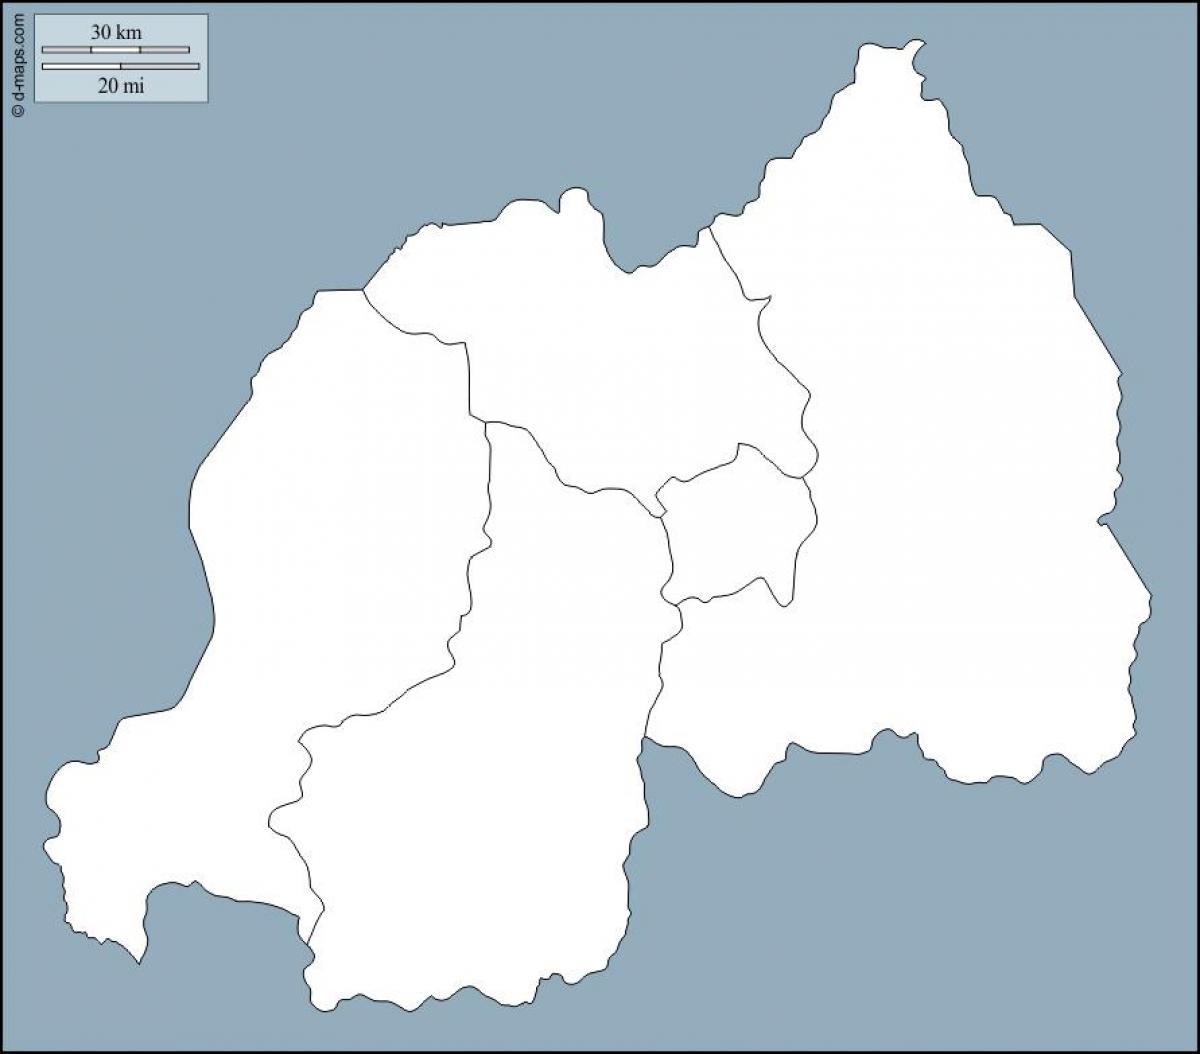 Ruanda esquema del mapa